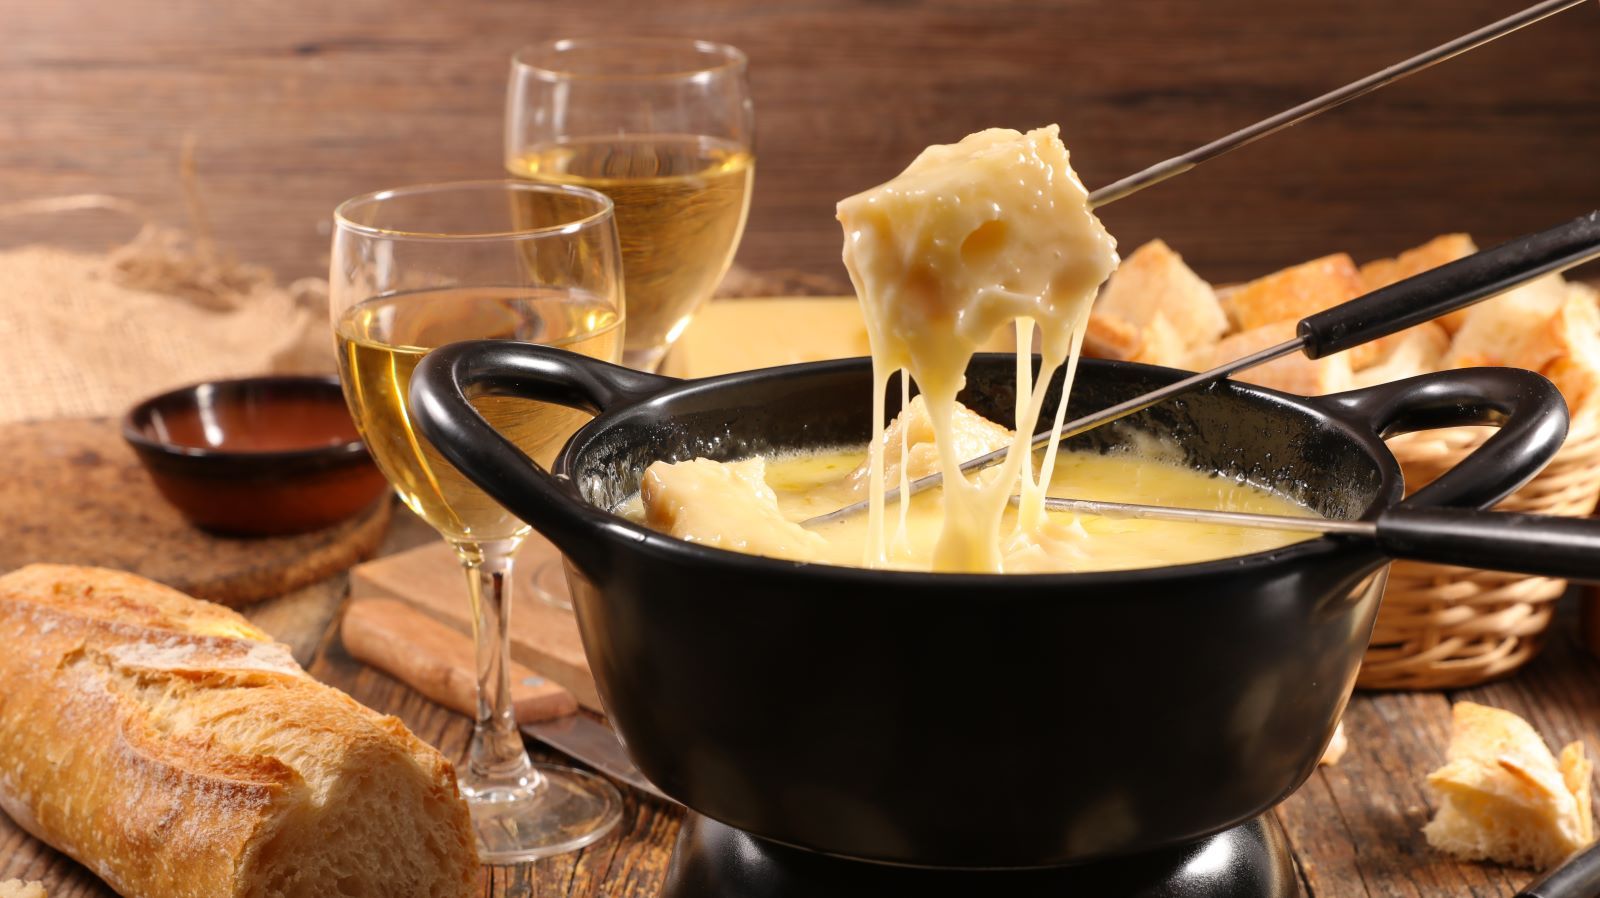 bread dipped into cheese fondue pot